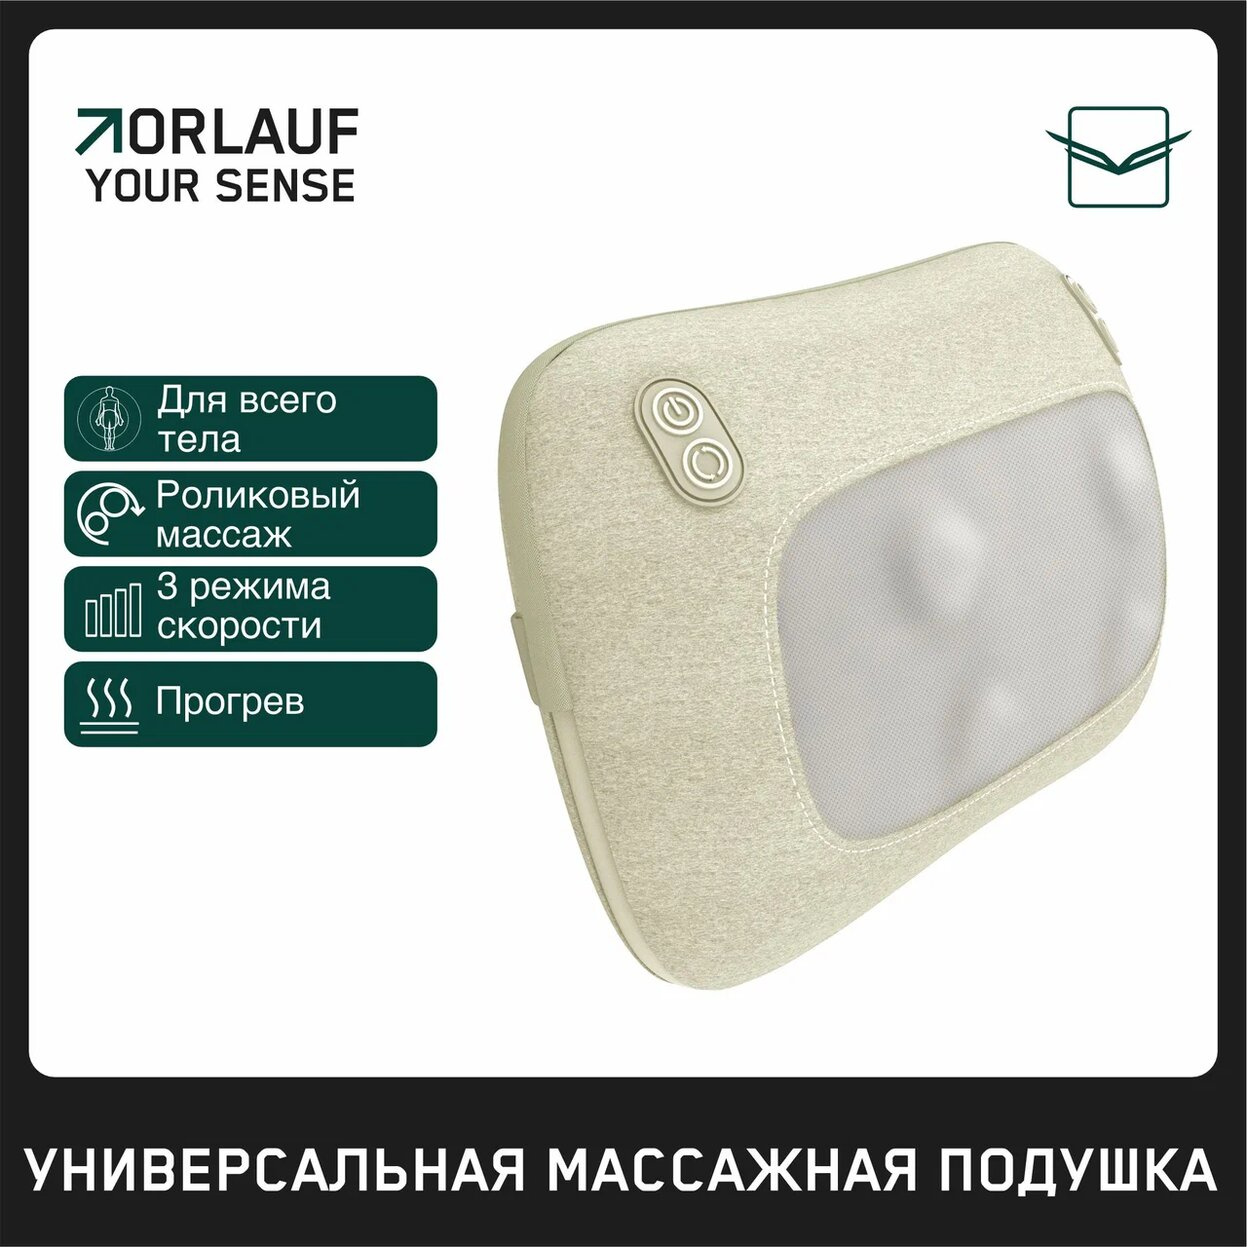 Orlauf Your Sense из каталога устройств для массажа в Волгограде по цене 9400 ₽